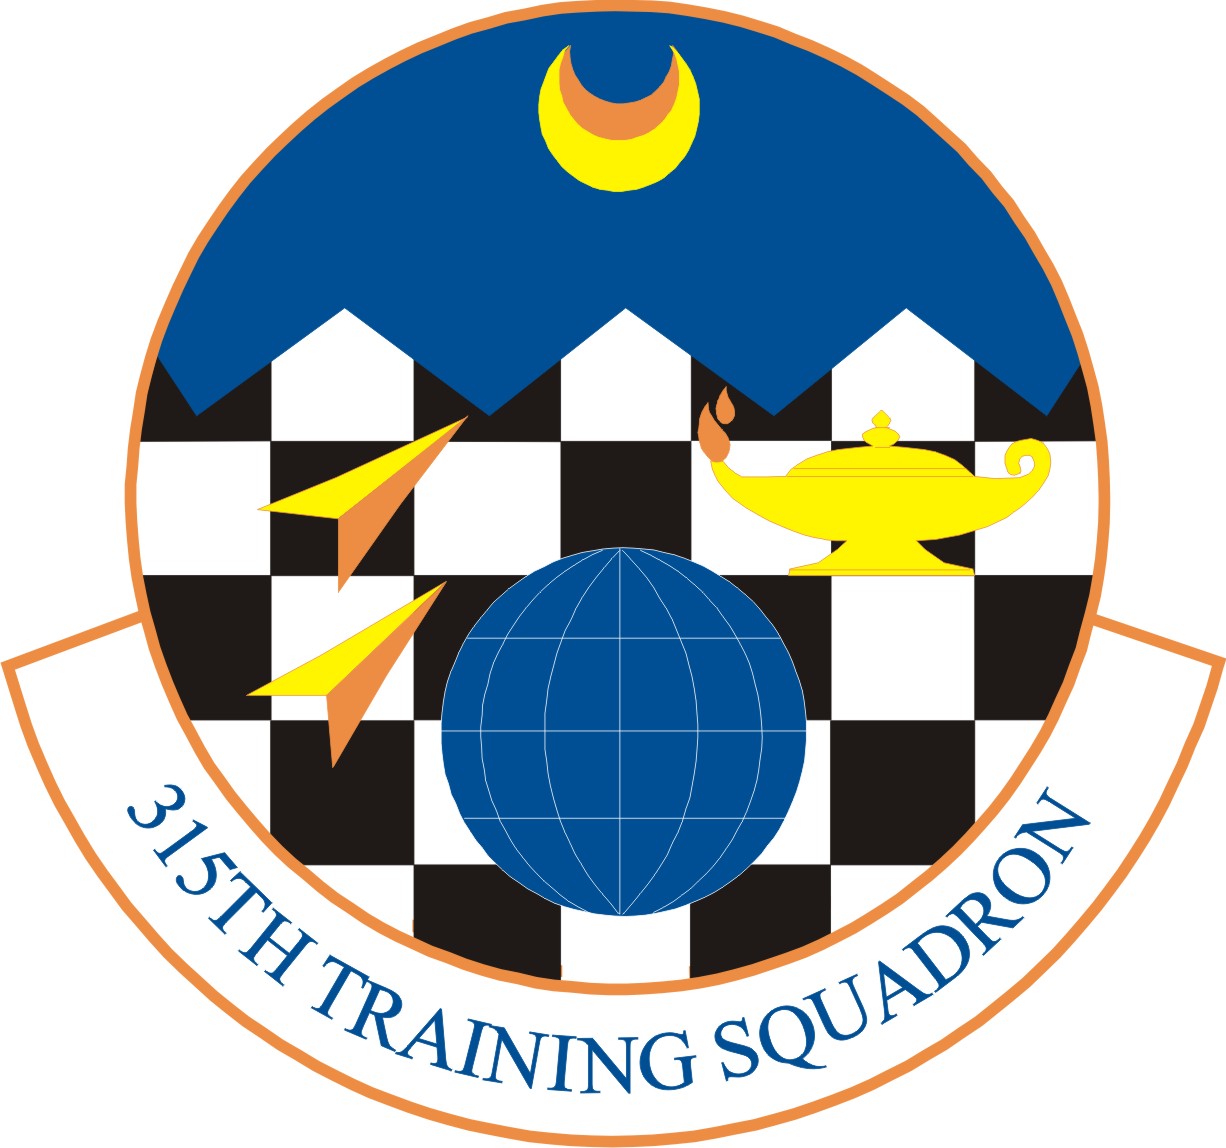 Factsheets : 315th Training Squadron